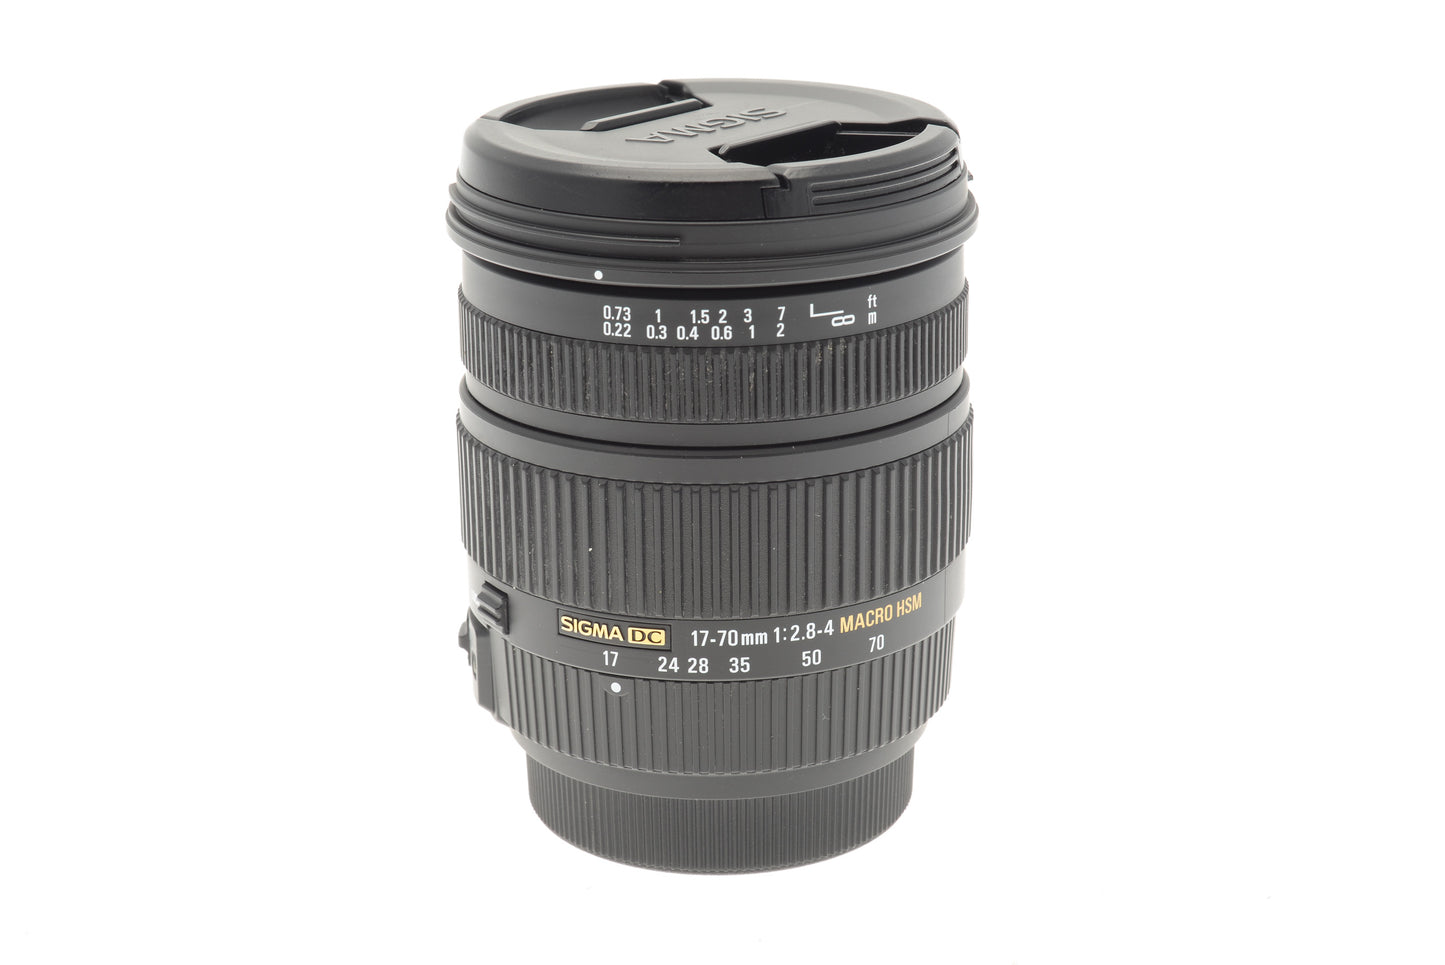 Sigma 17-70mm f2.8-4 DC HSM Macro - Lens